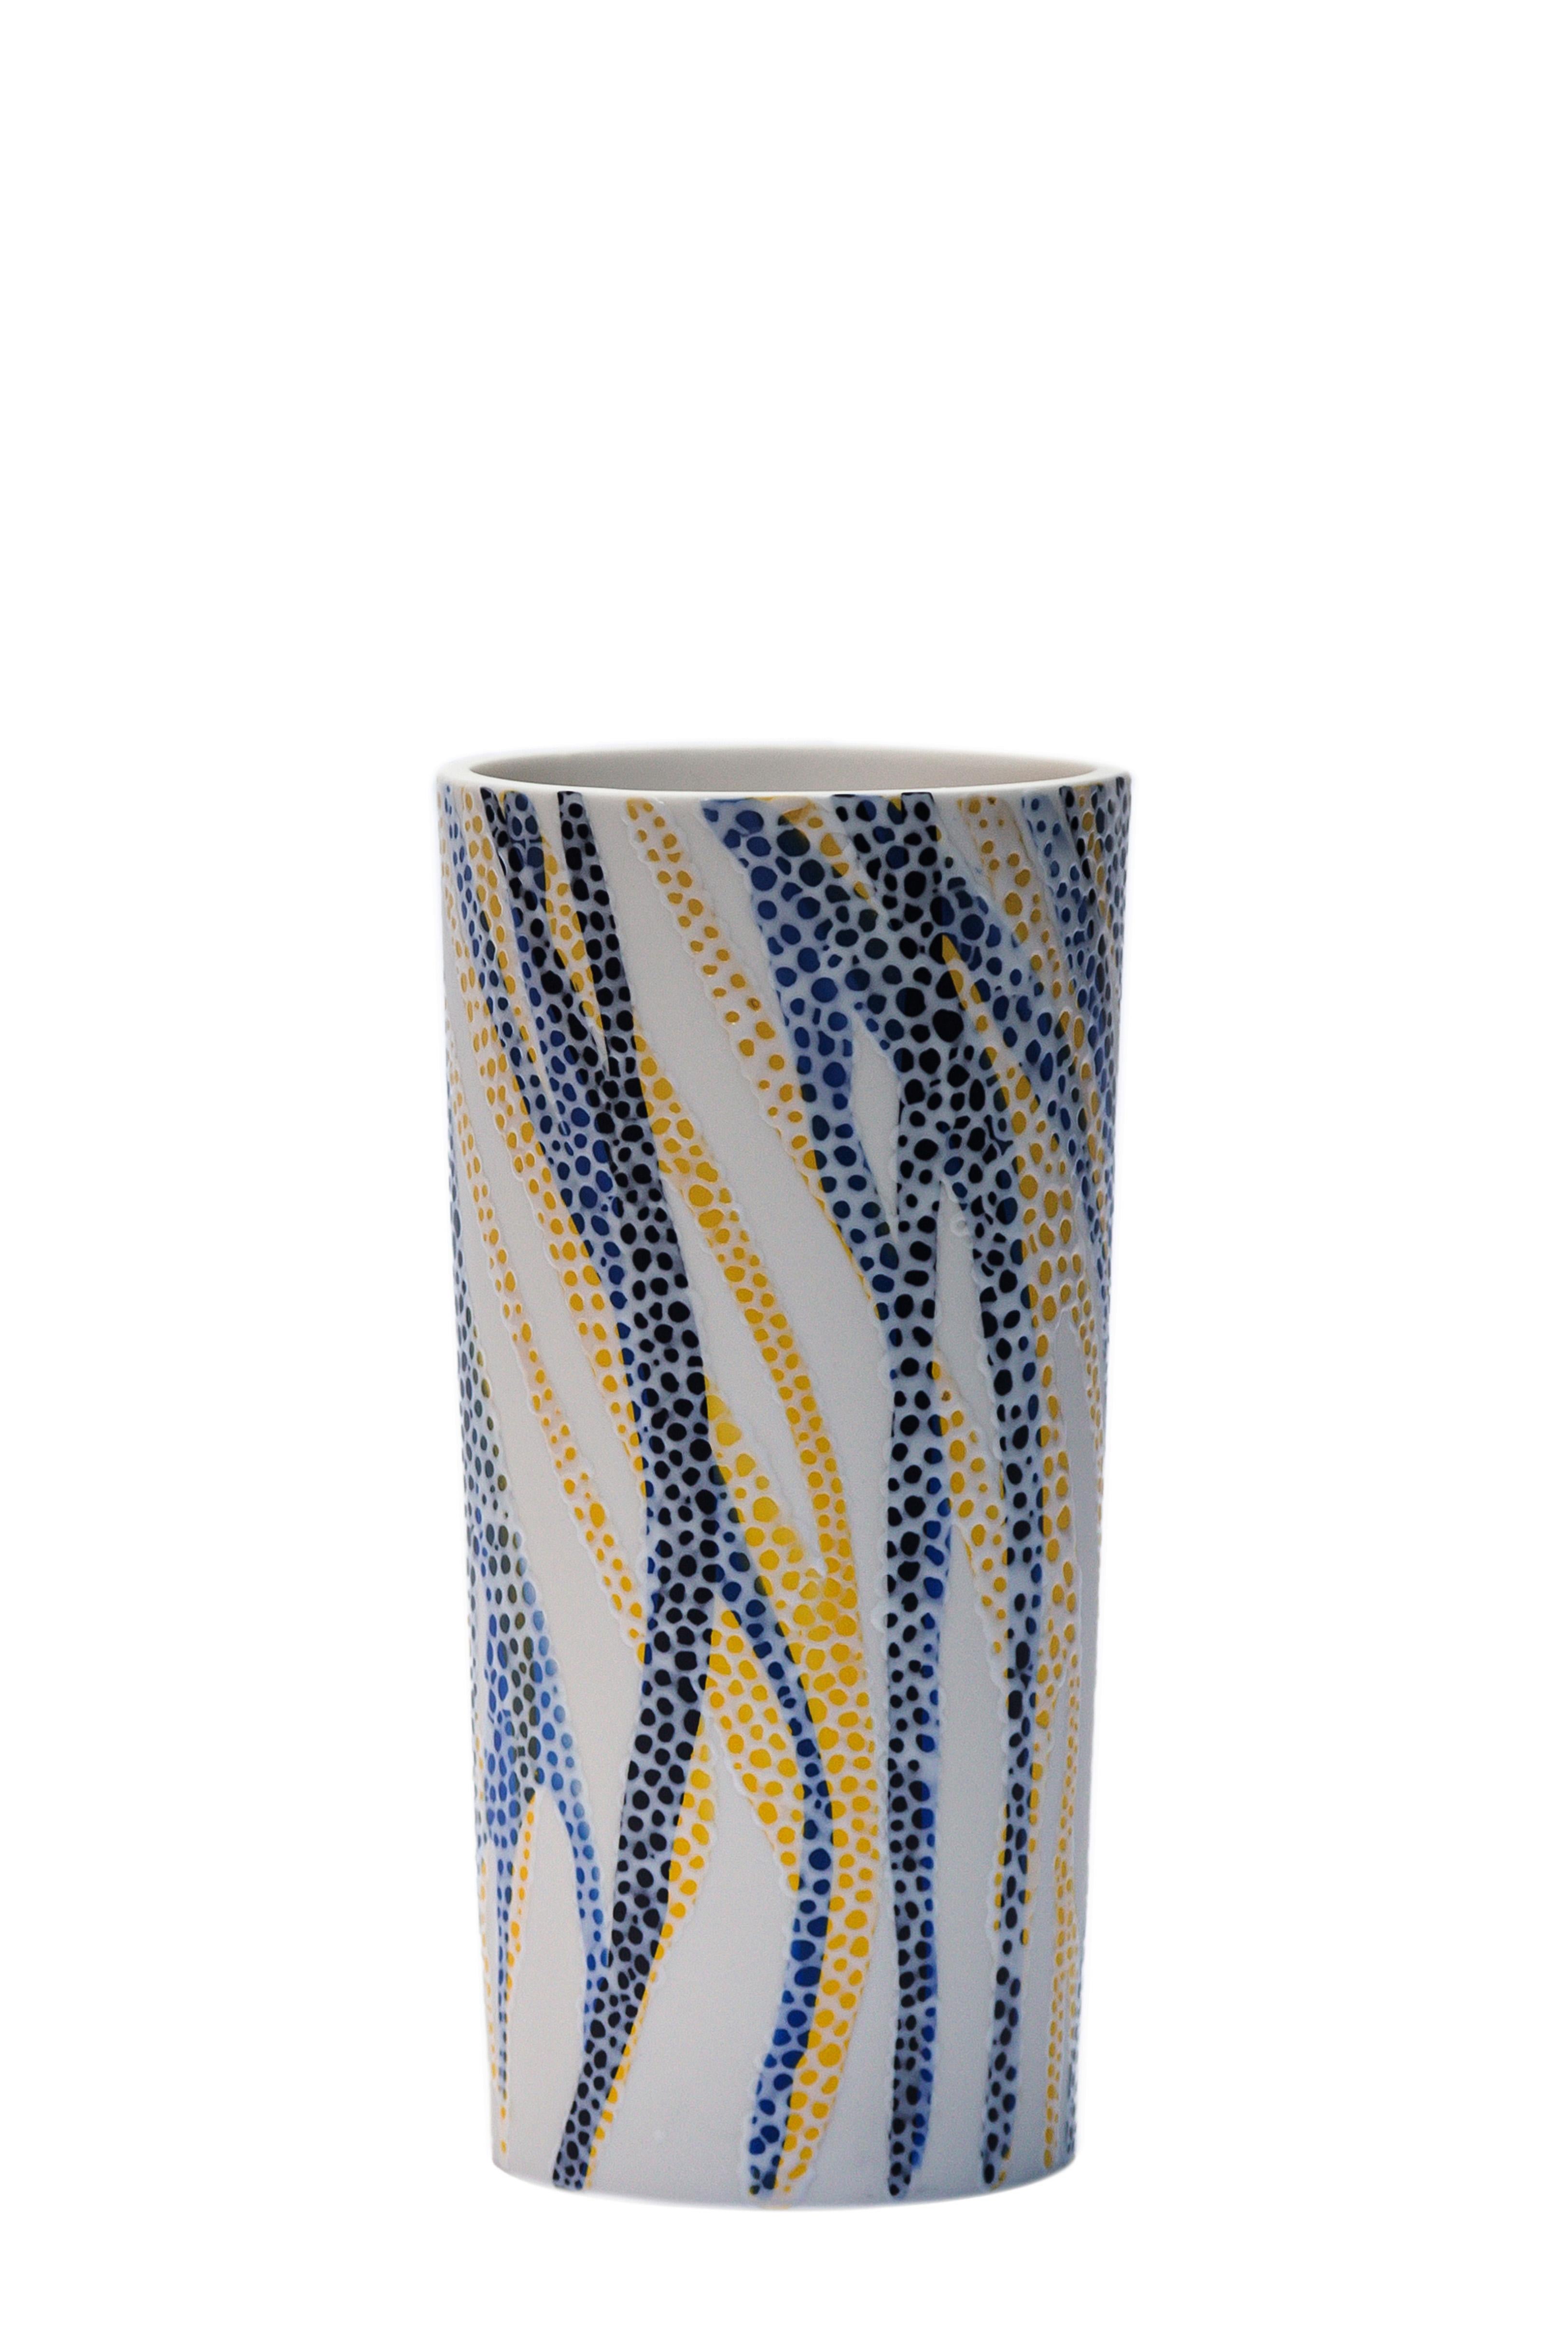 Hand-Painted Porcelain Vase by Eugenio Michelini Unique Parianware Contemporary 21st Century For Sale